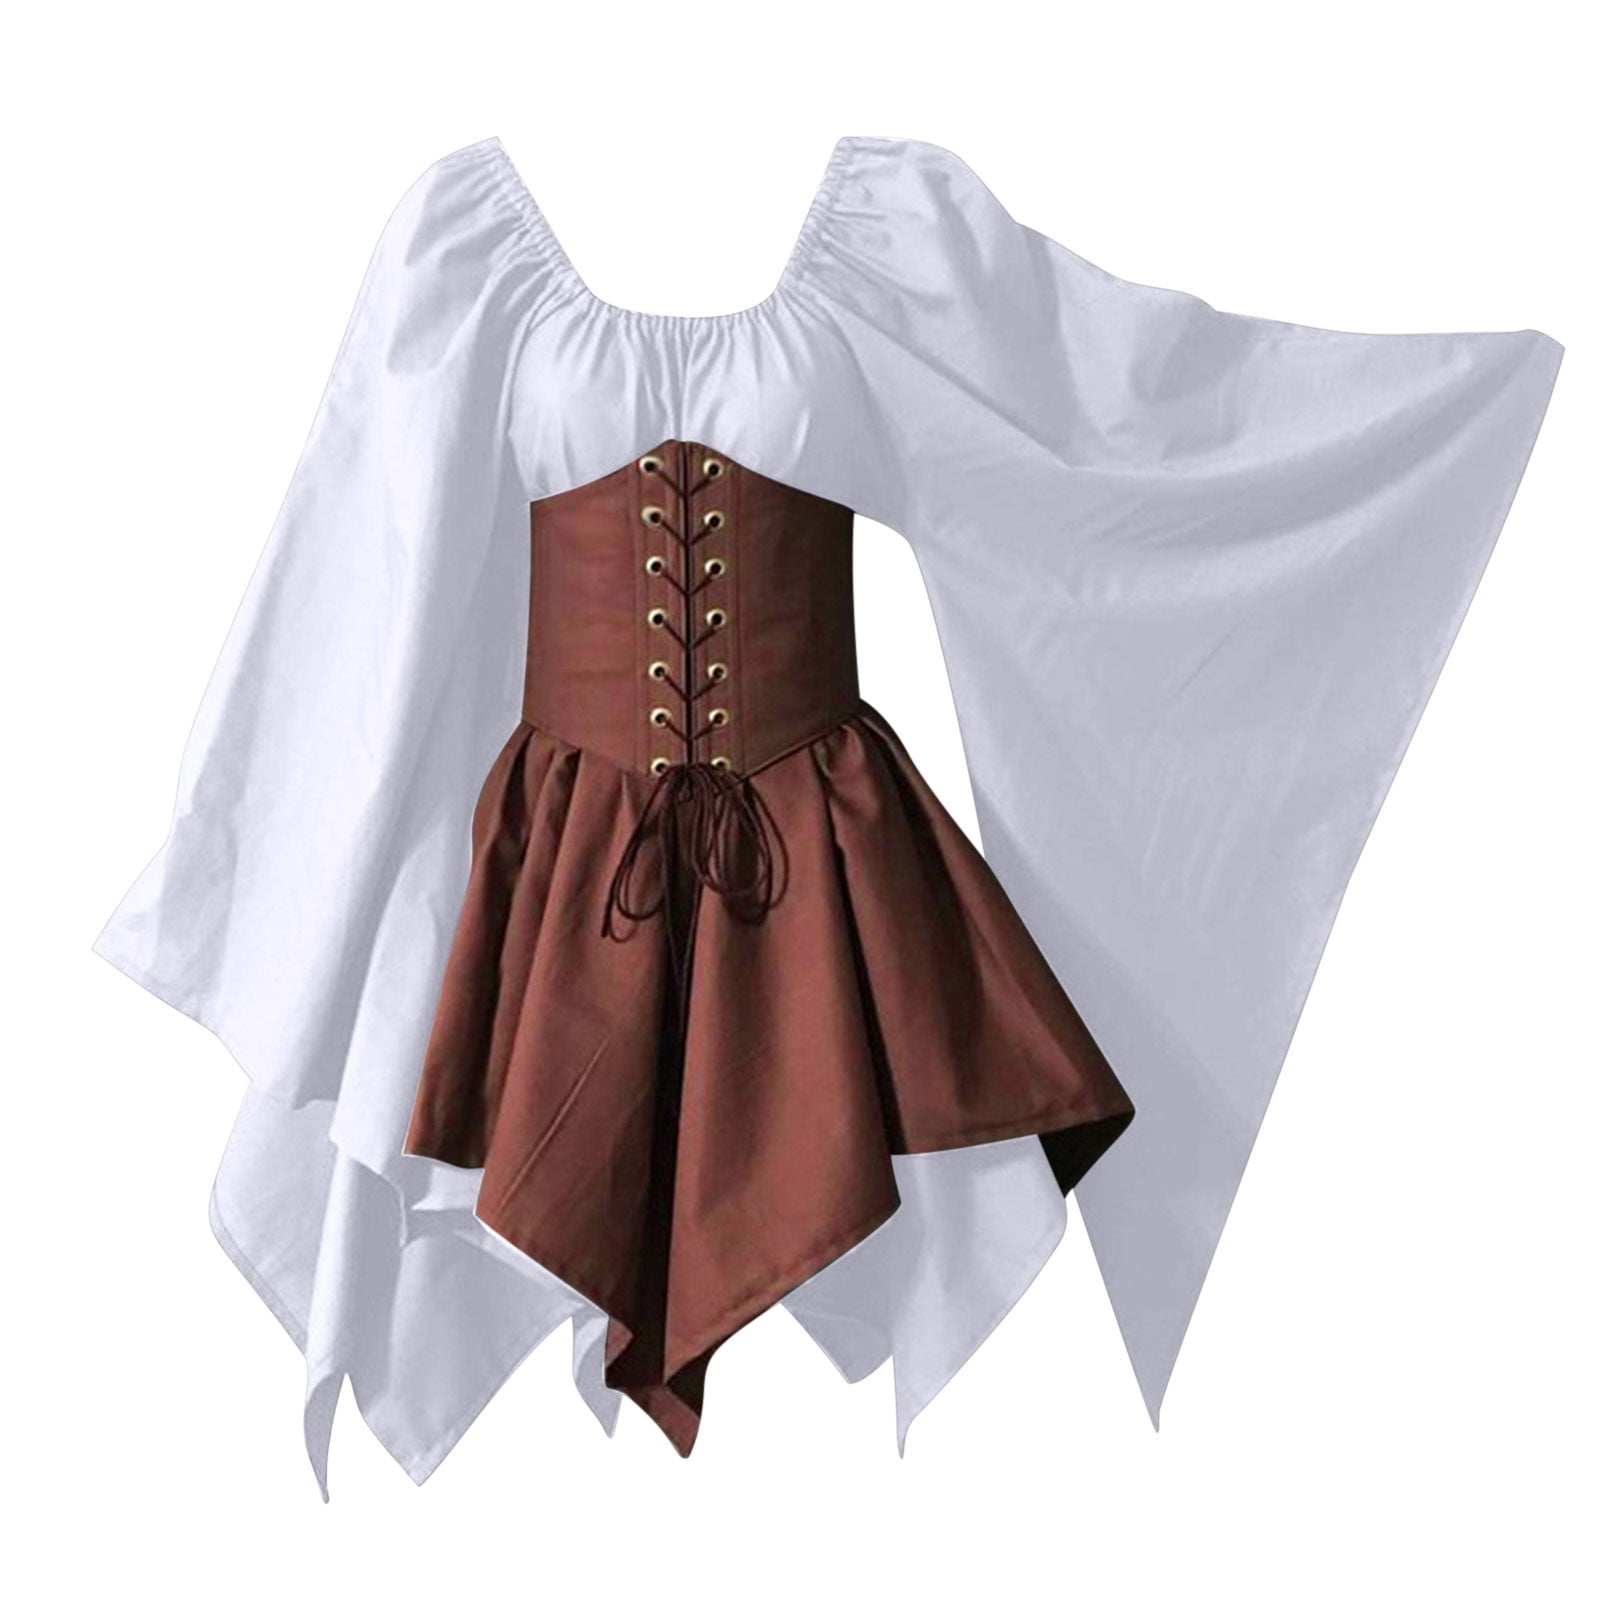 OFLALW Women's Medieval Renaissance Dress Victorian Gothic Corset